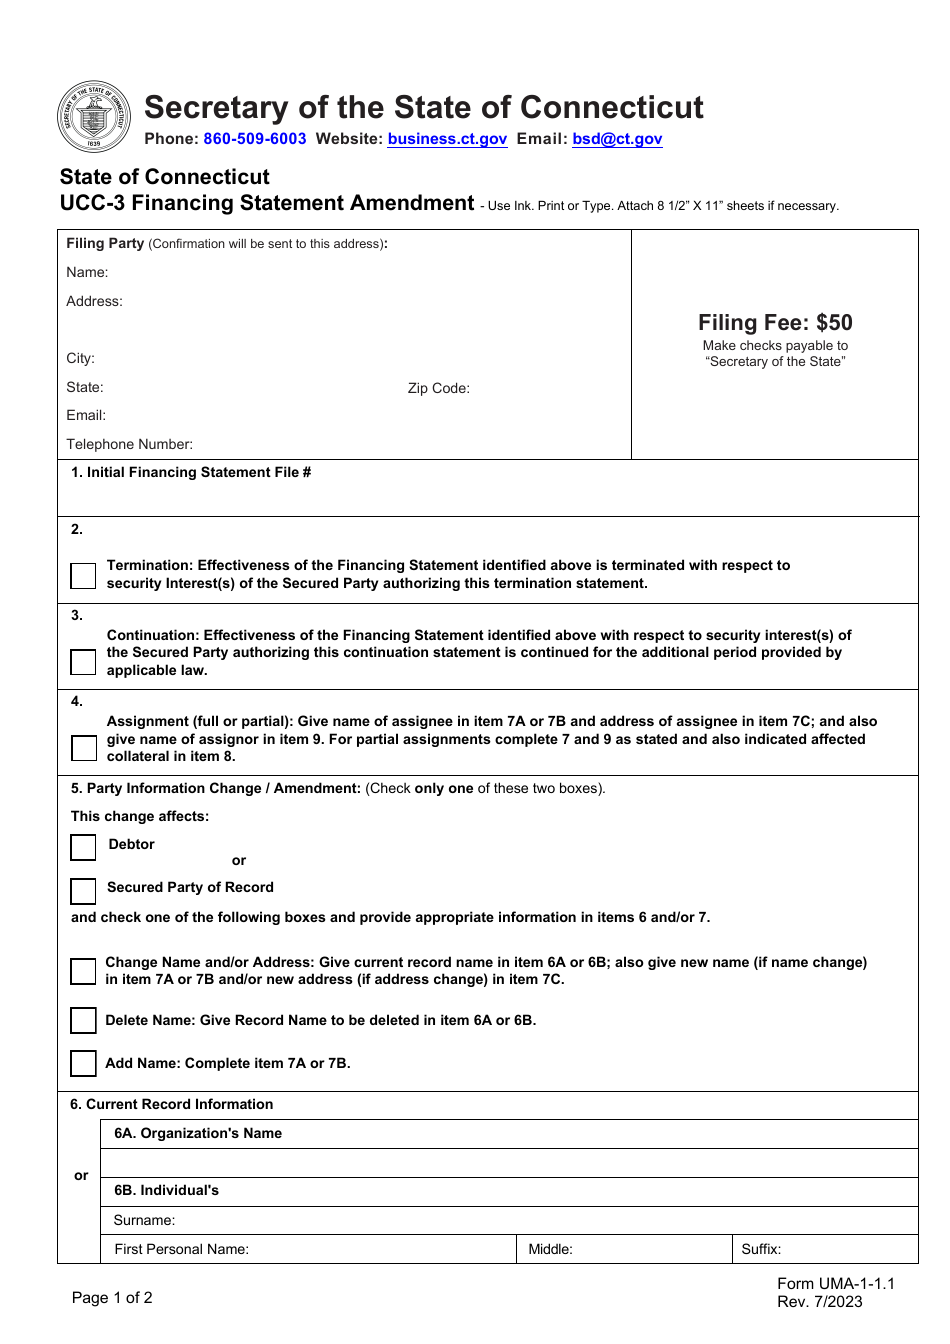 Form UCC-3 (UMA-1.1.1) Financing Statement Amendment - Connecticut, Page 1